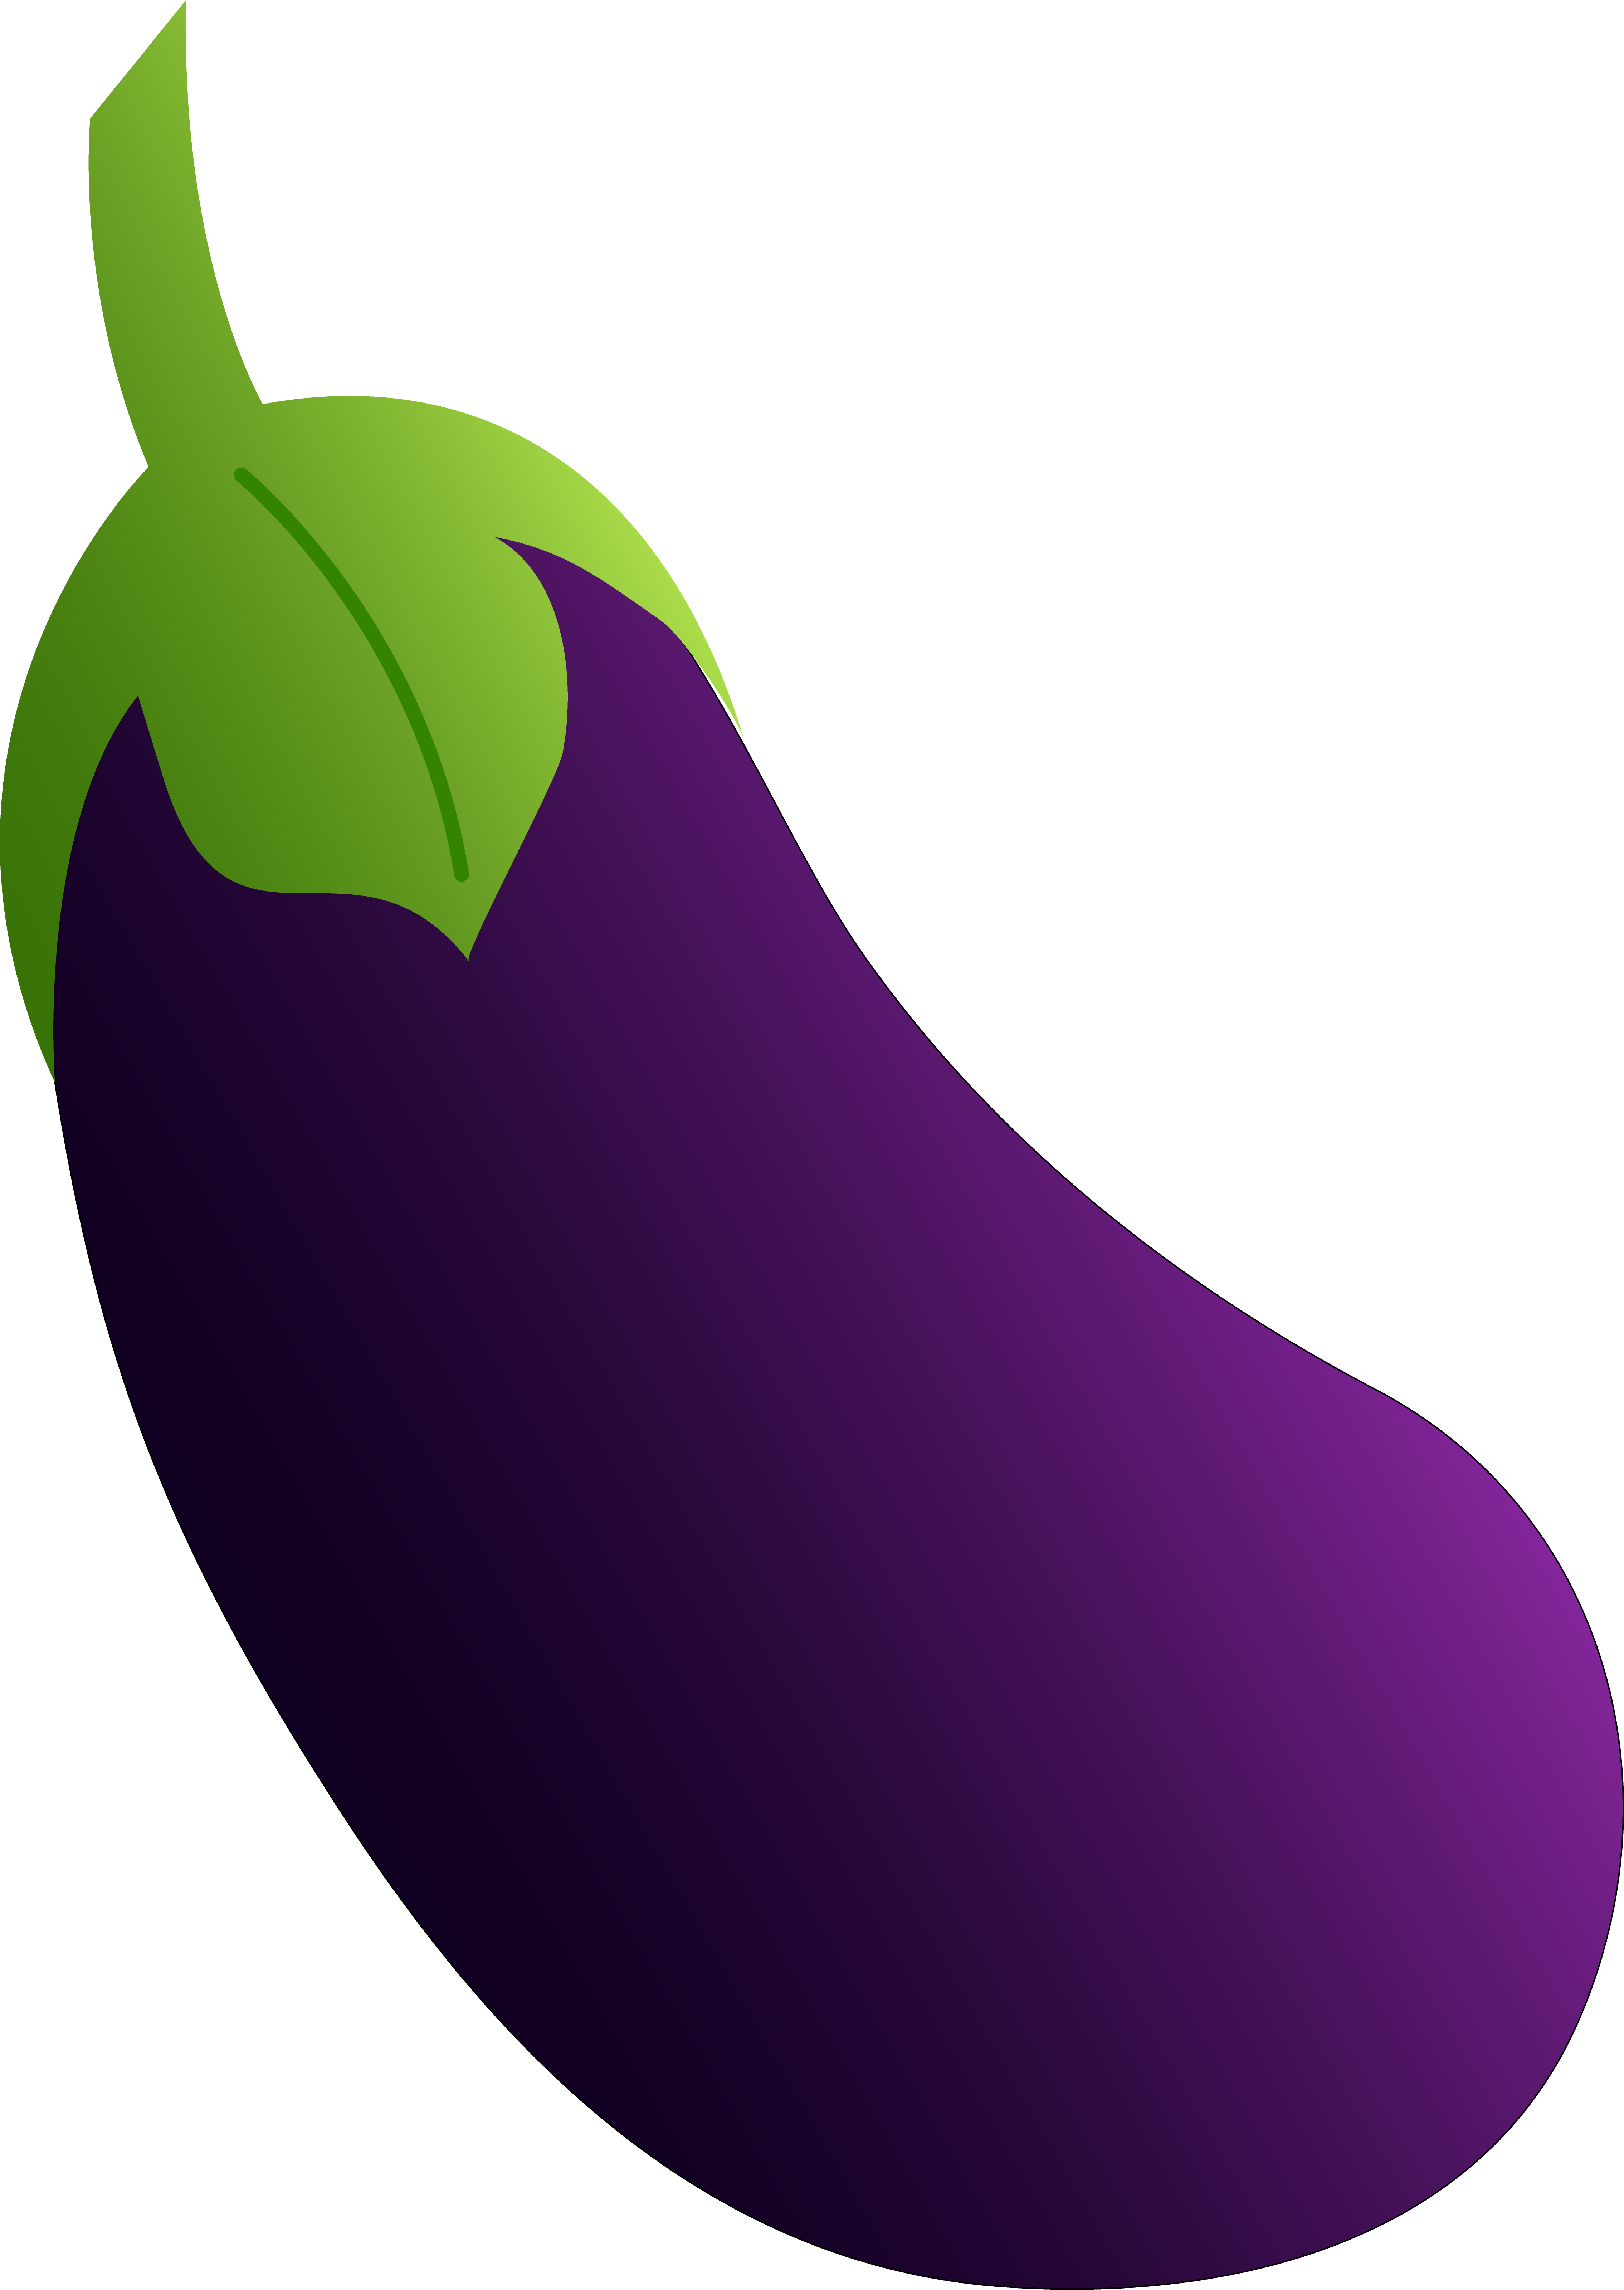 Free Eggplant Transparent, Download Free Eggplant Transparent png images, F...